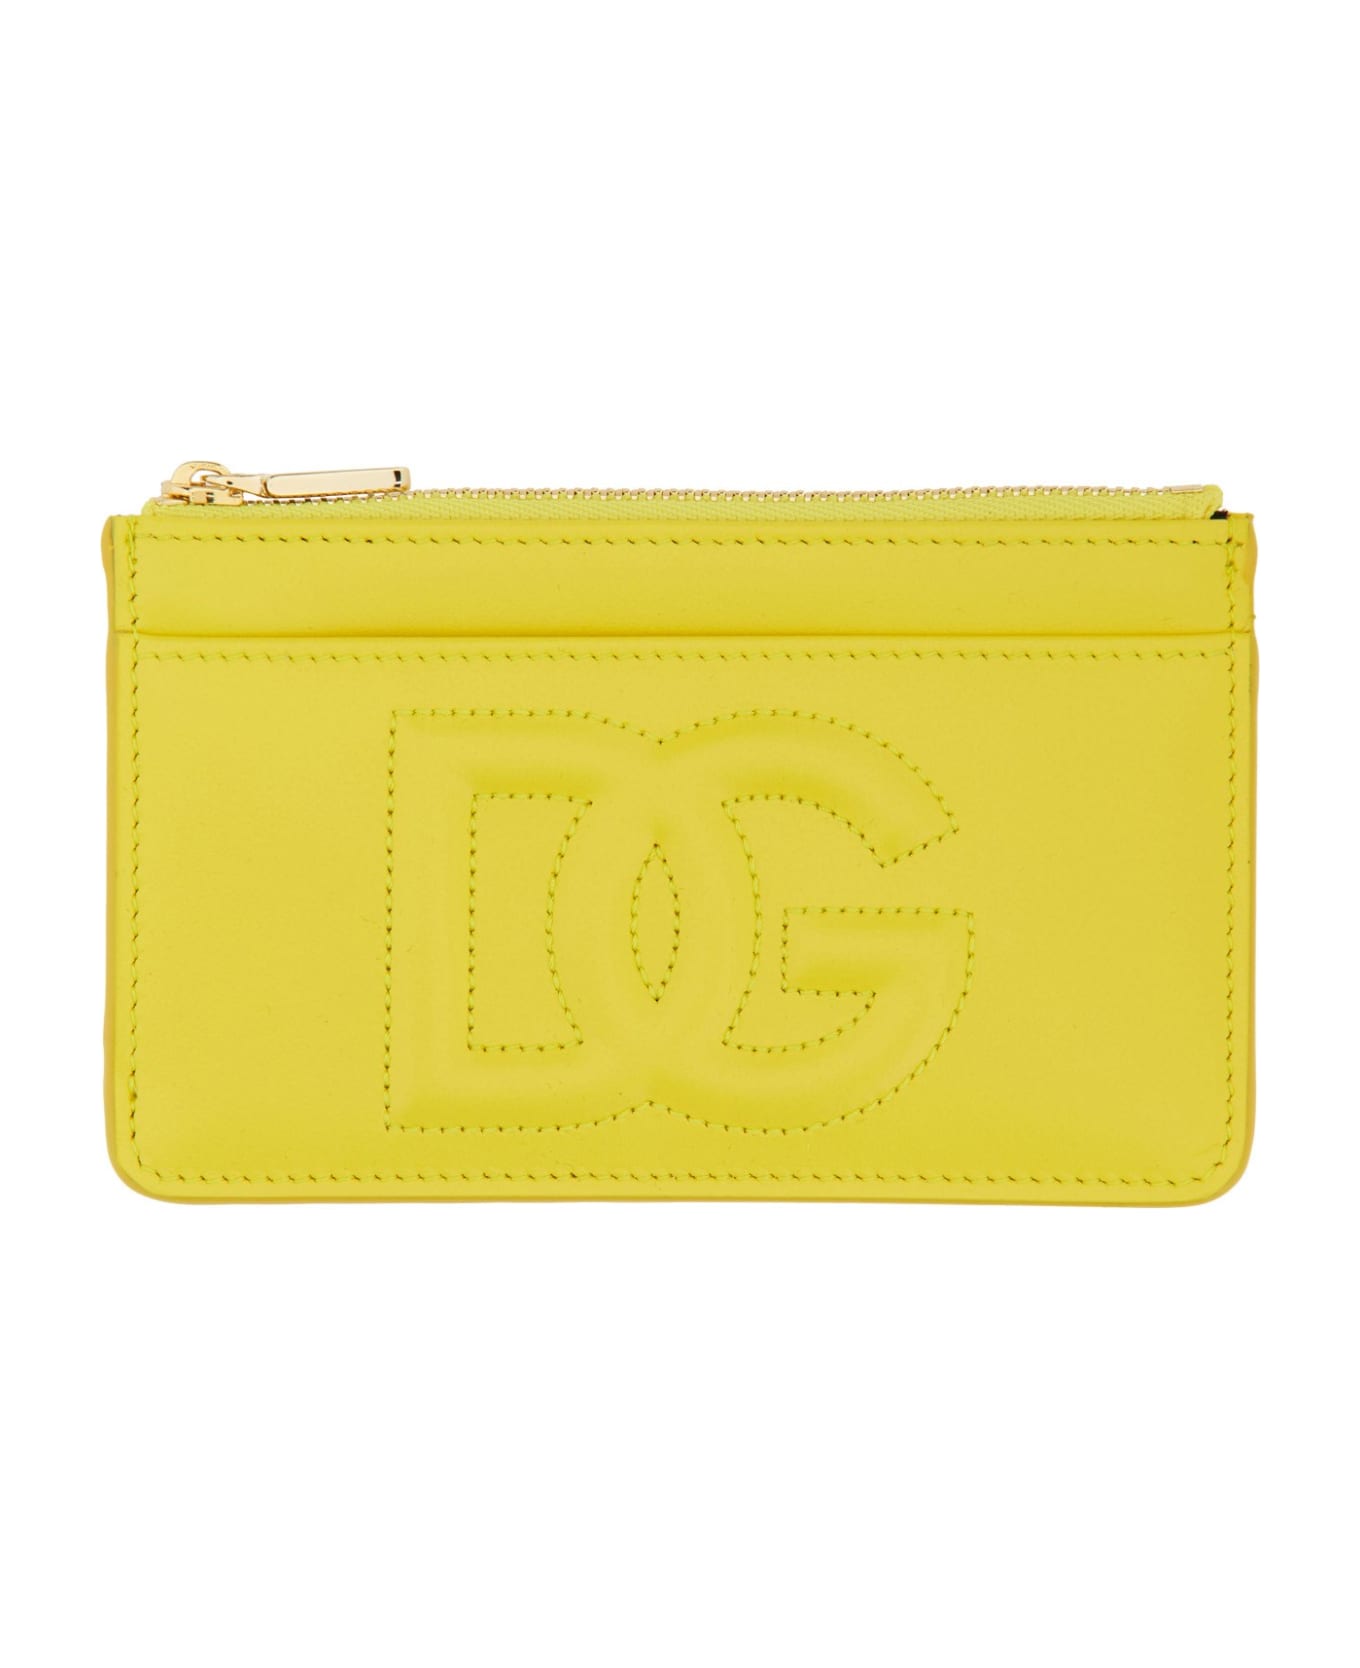 Dolce & Gabbana Leather Card Holder - GIALLO ORO 財布